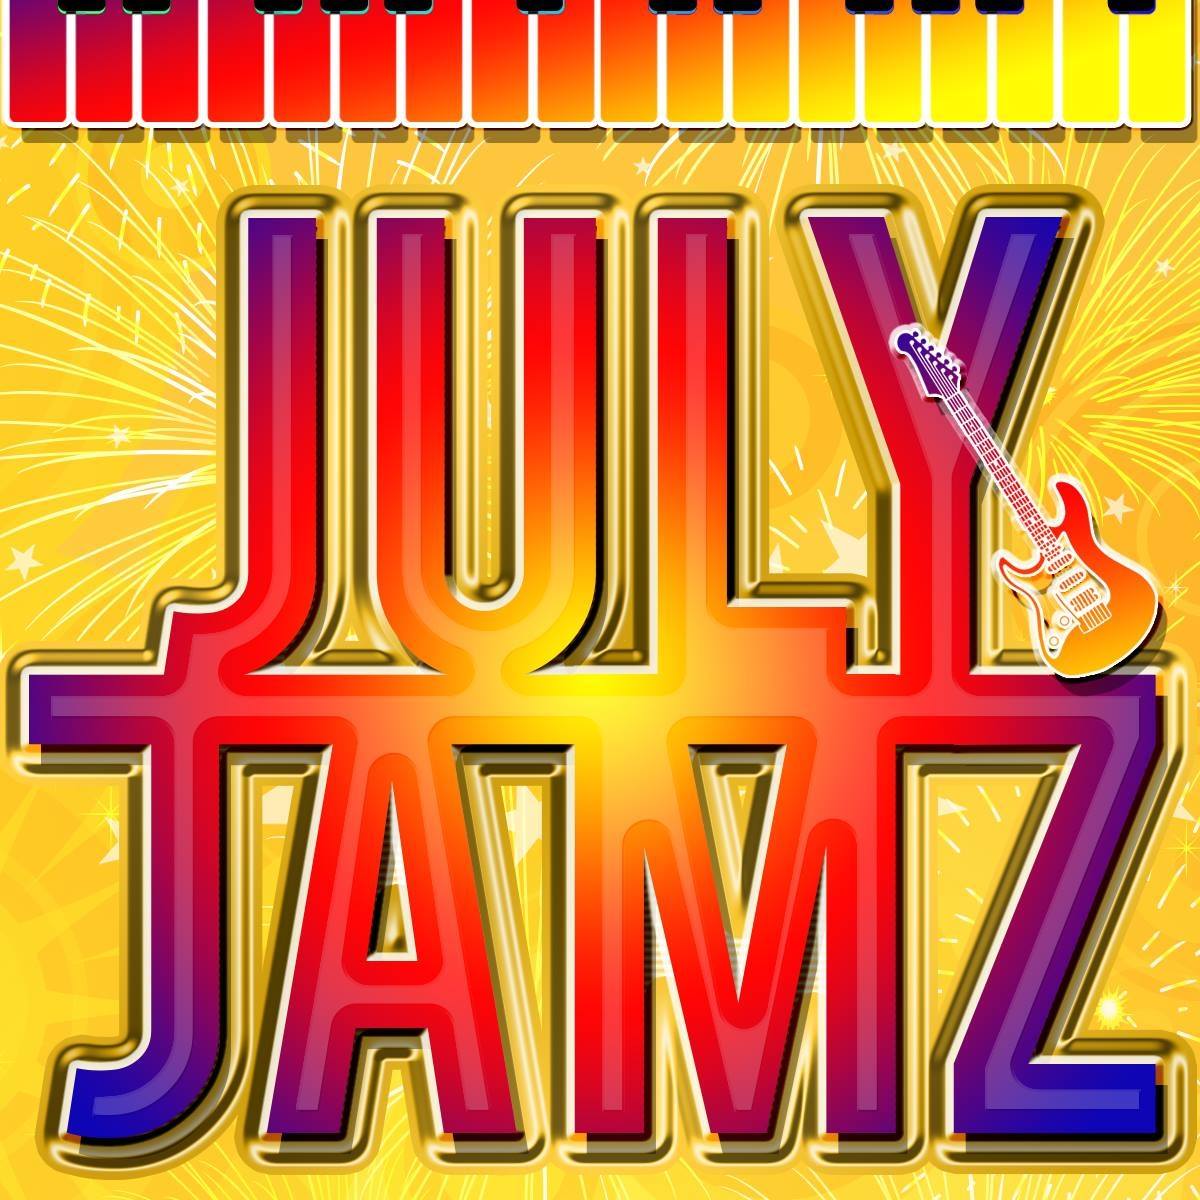 July Jamz